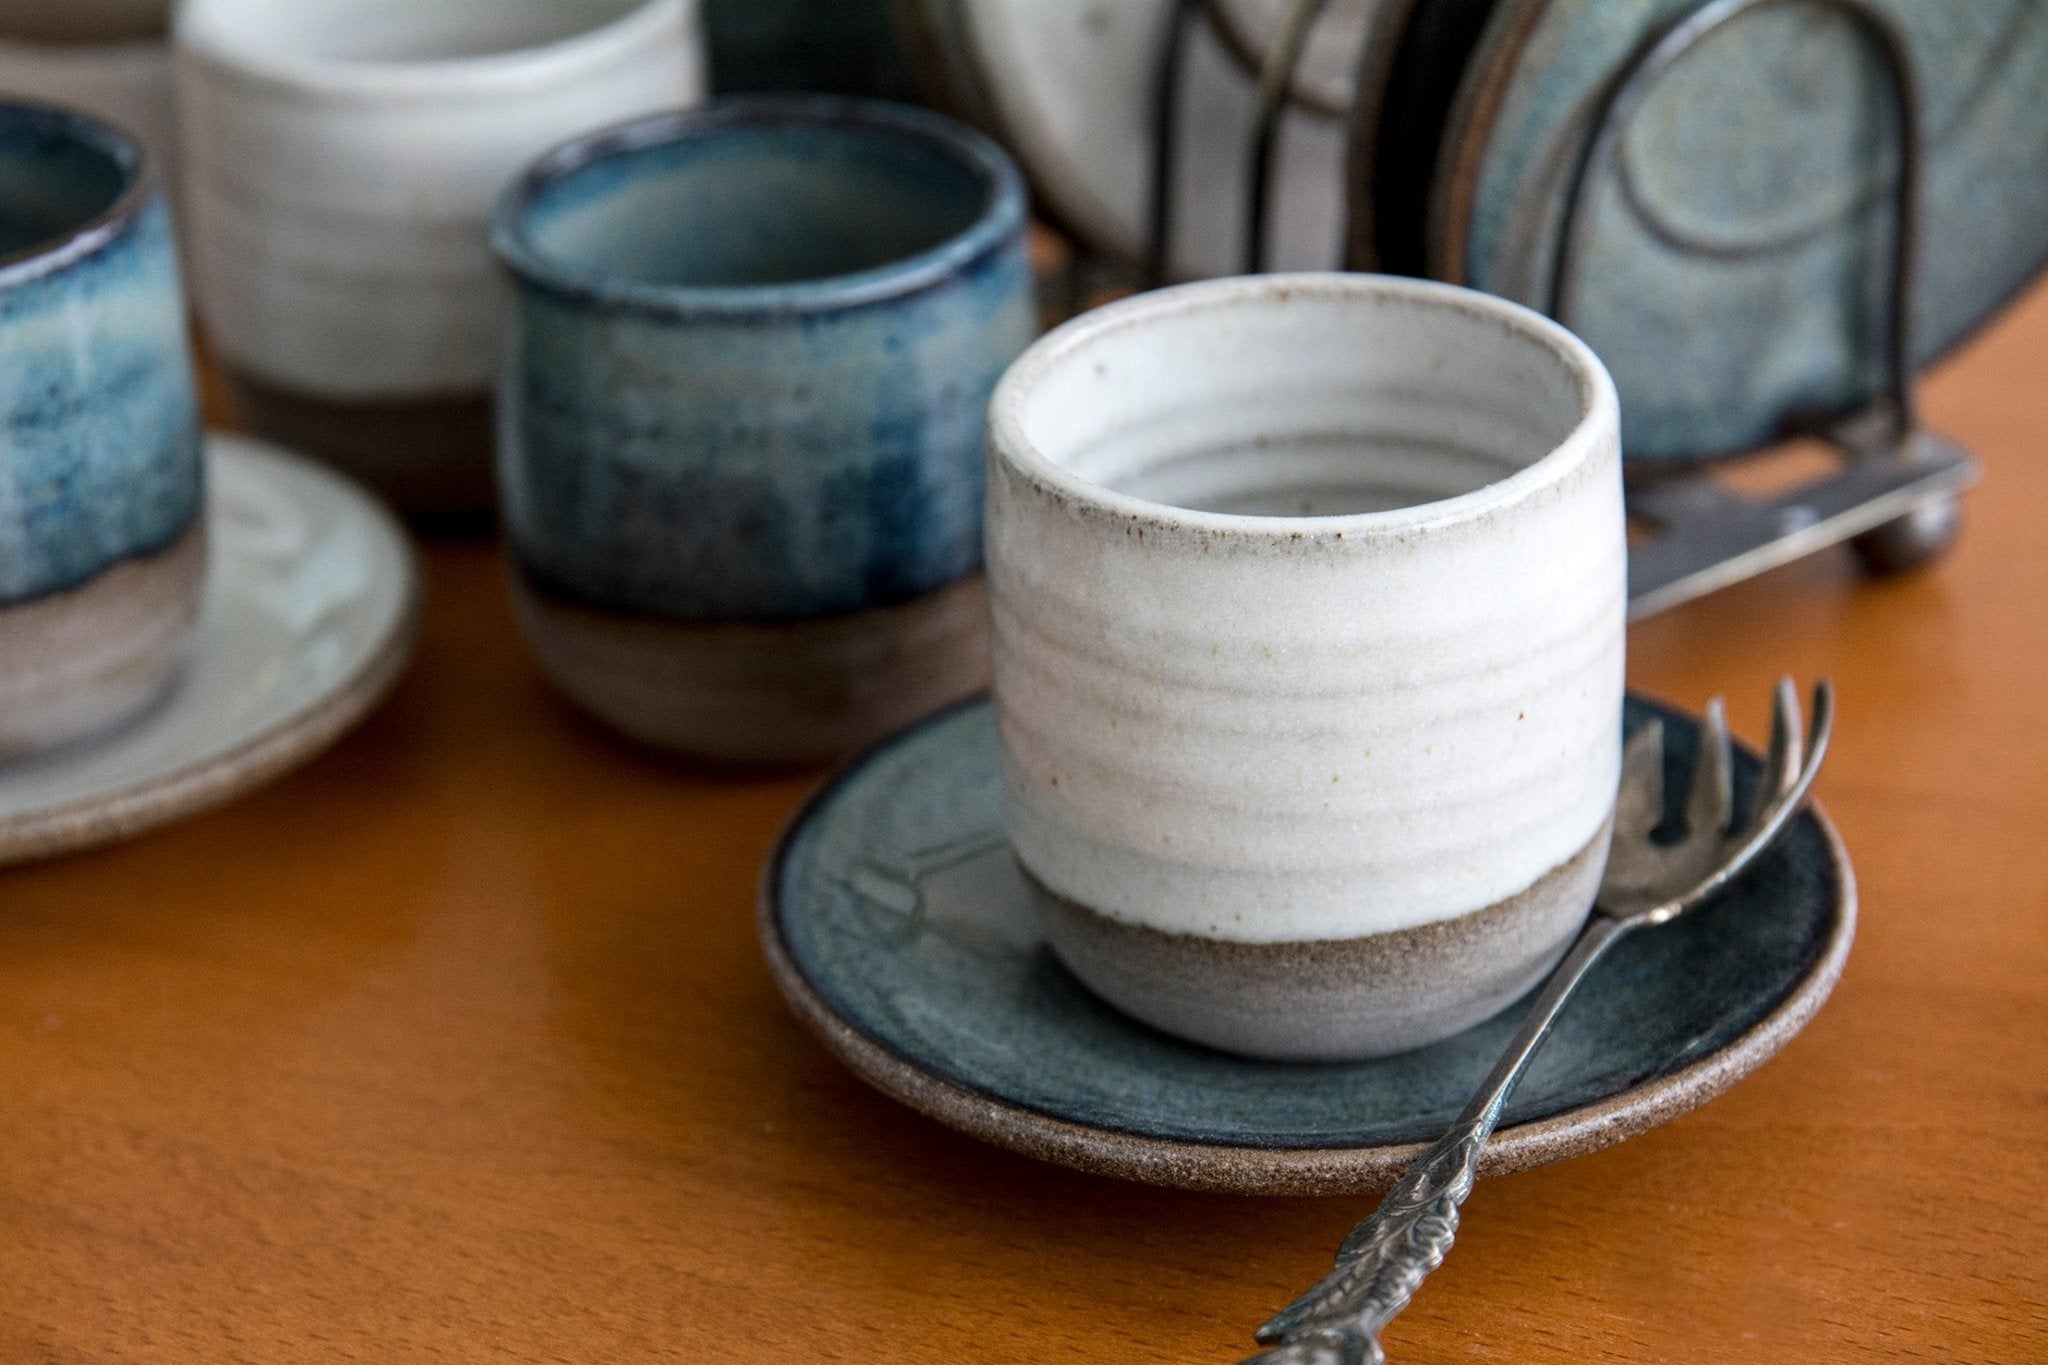 2 Premium Espresso Cups, Handcrafted Specialty Coffee Ceramic Cups